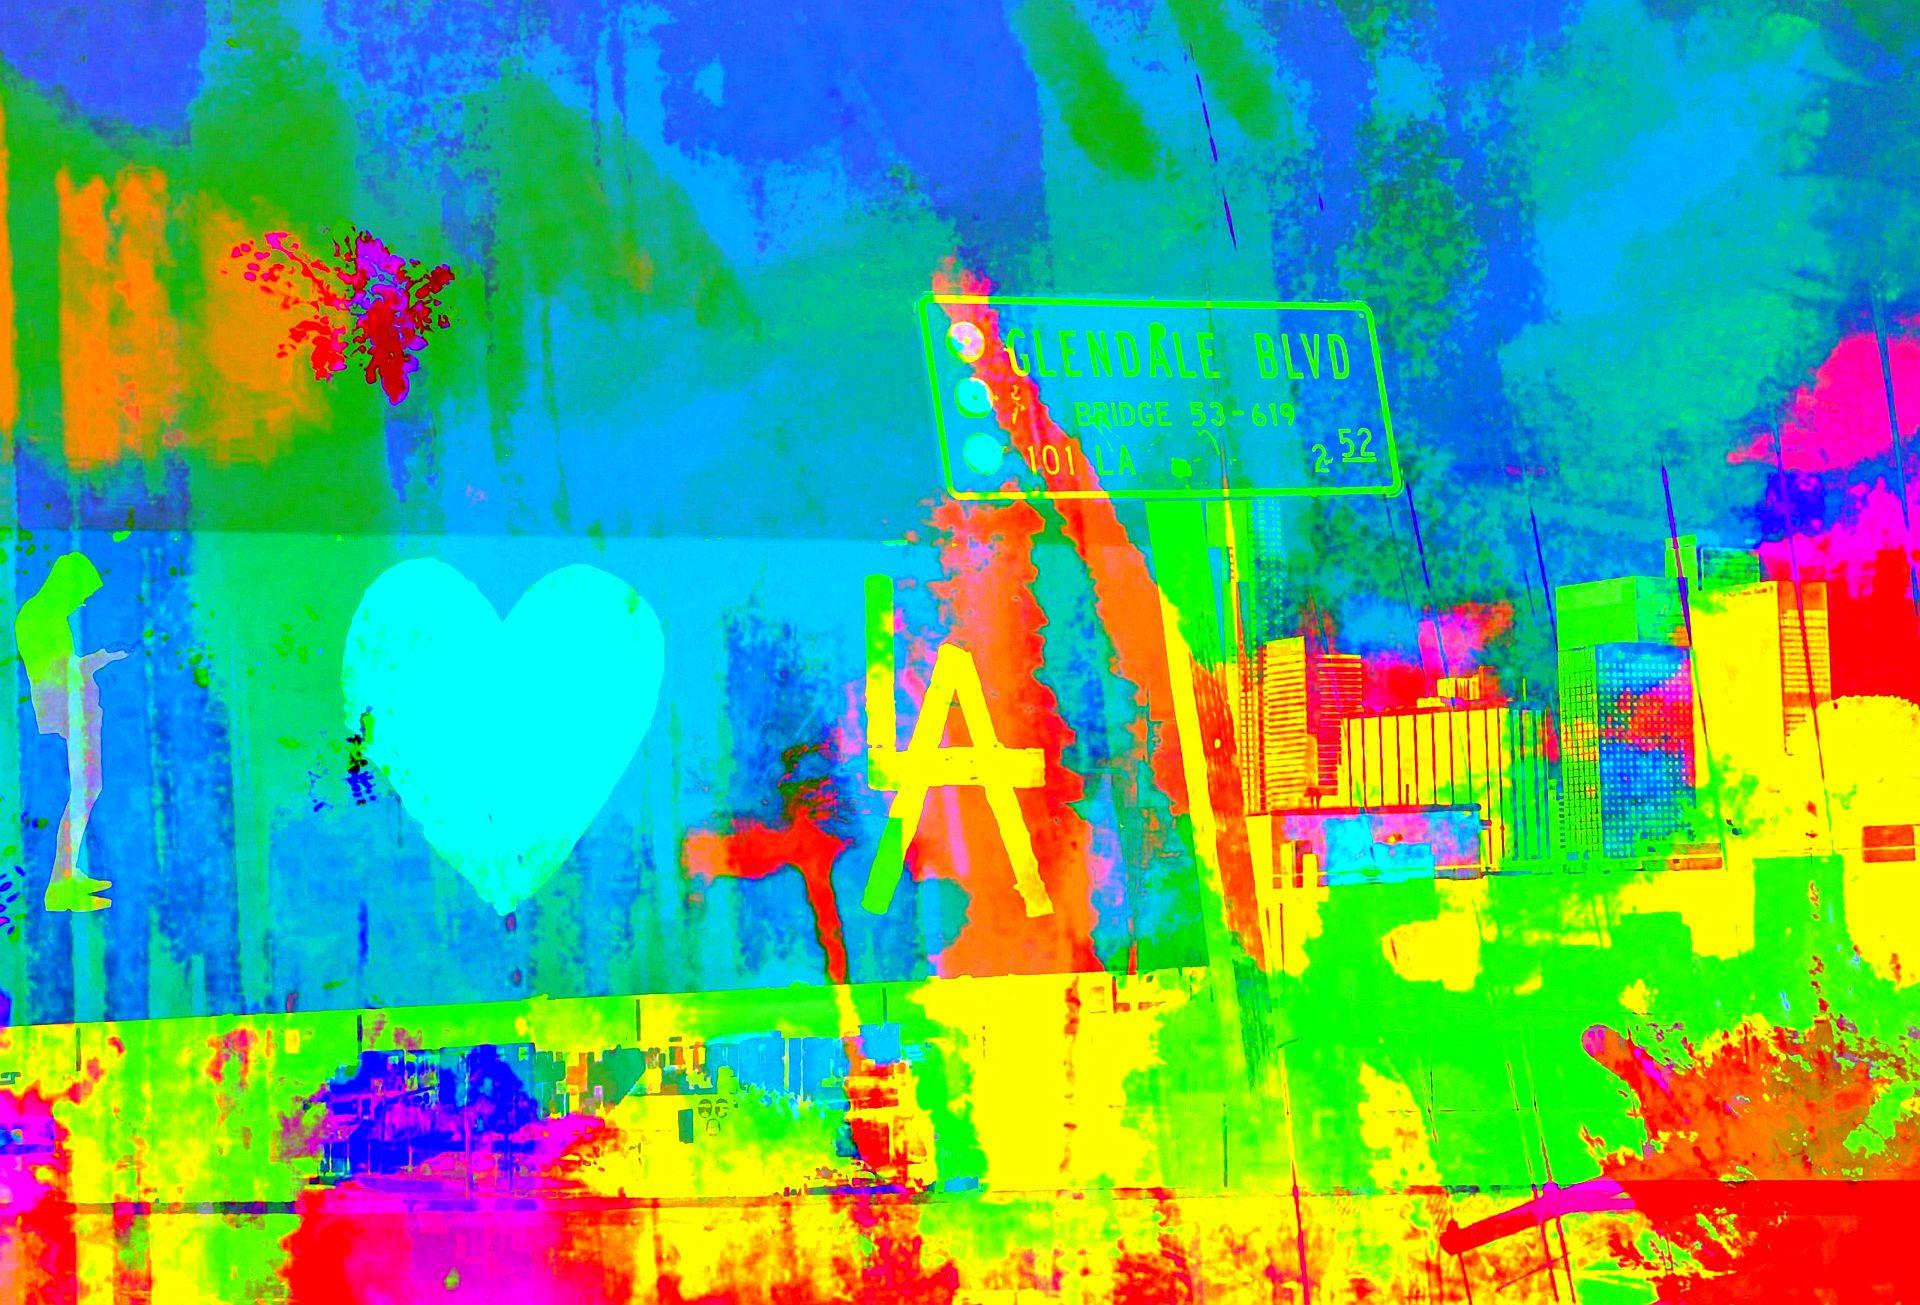 Susanne Belcher "Love On The 101" 37x45 Digital Photo Collage $1300